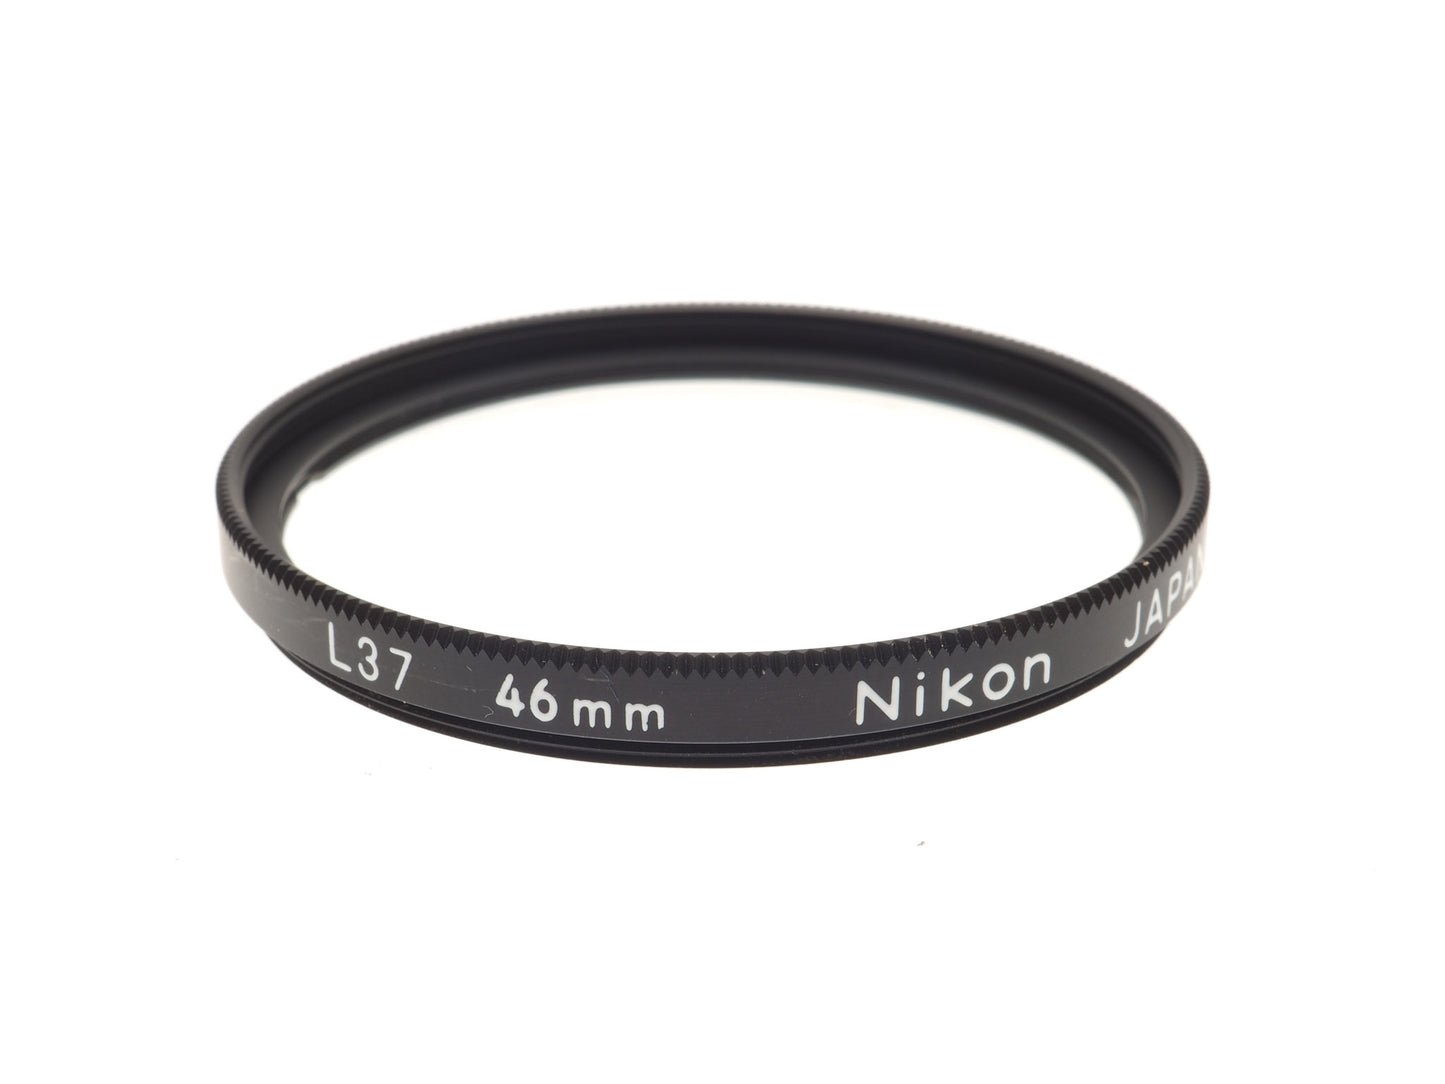 Nikon 46mm L37 Filter - Accessory